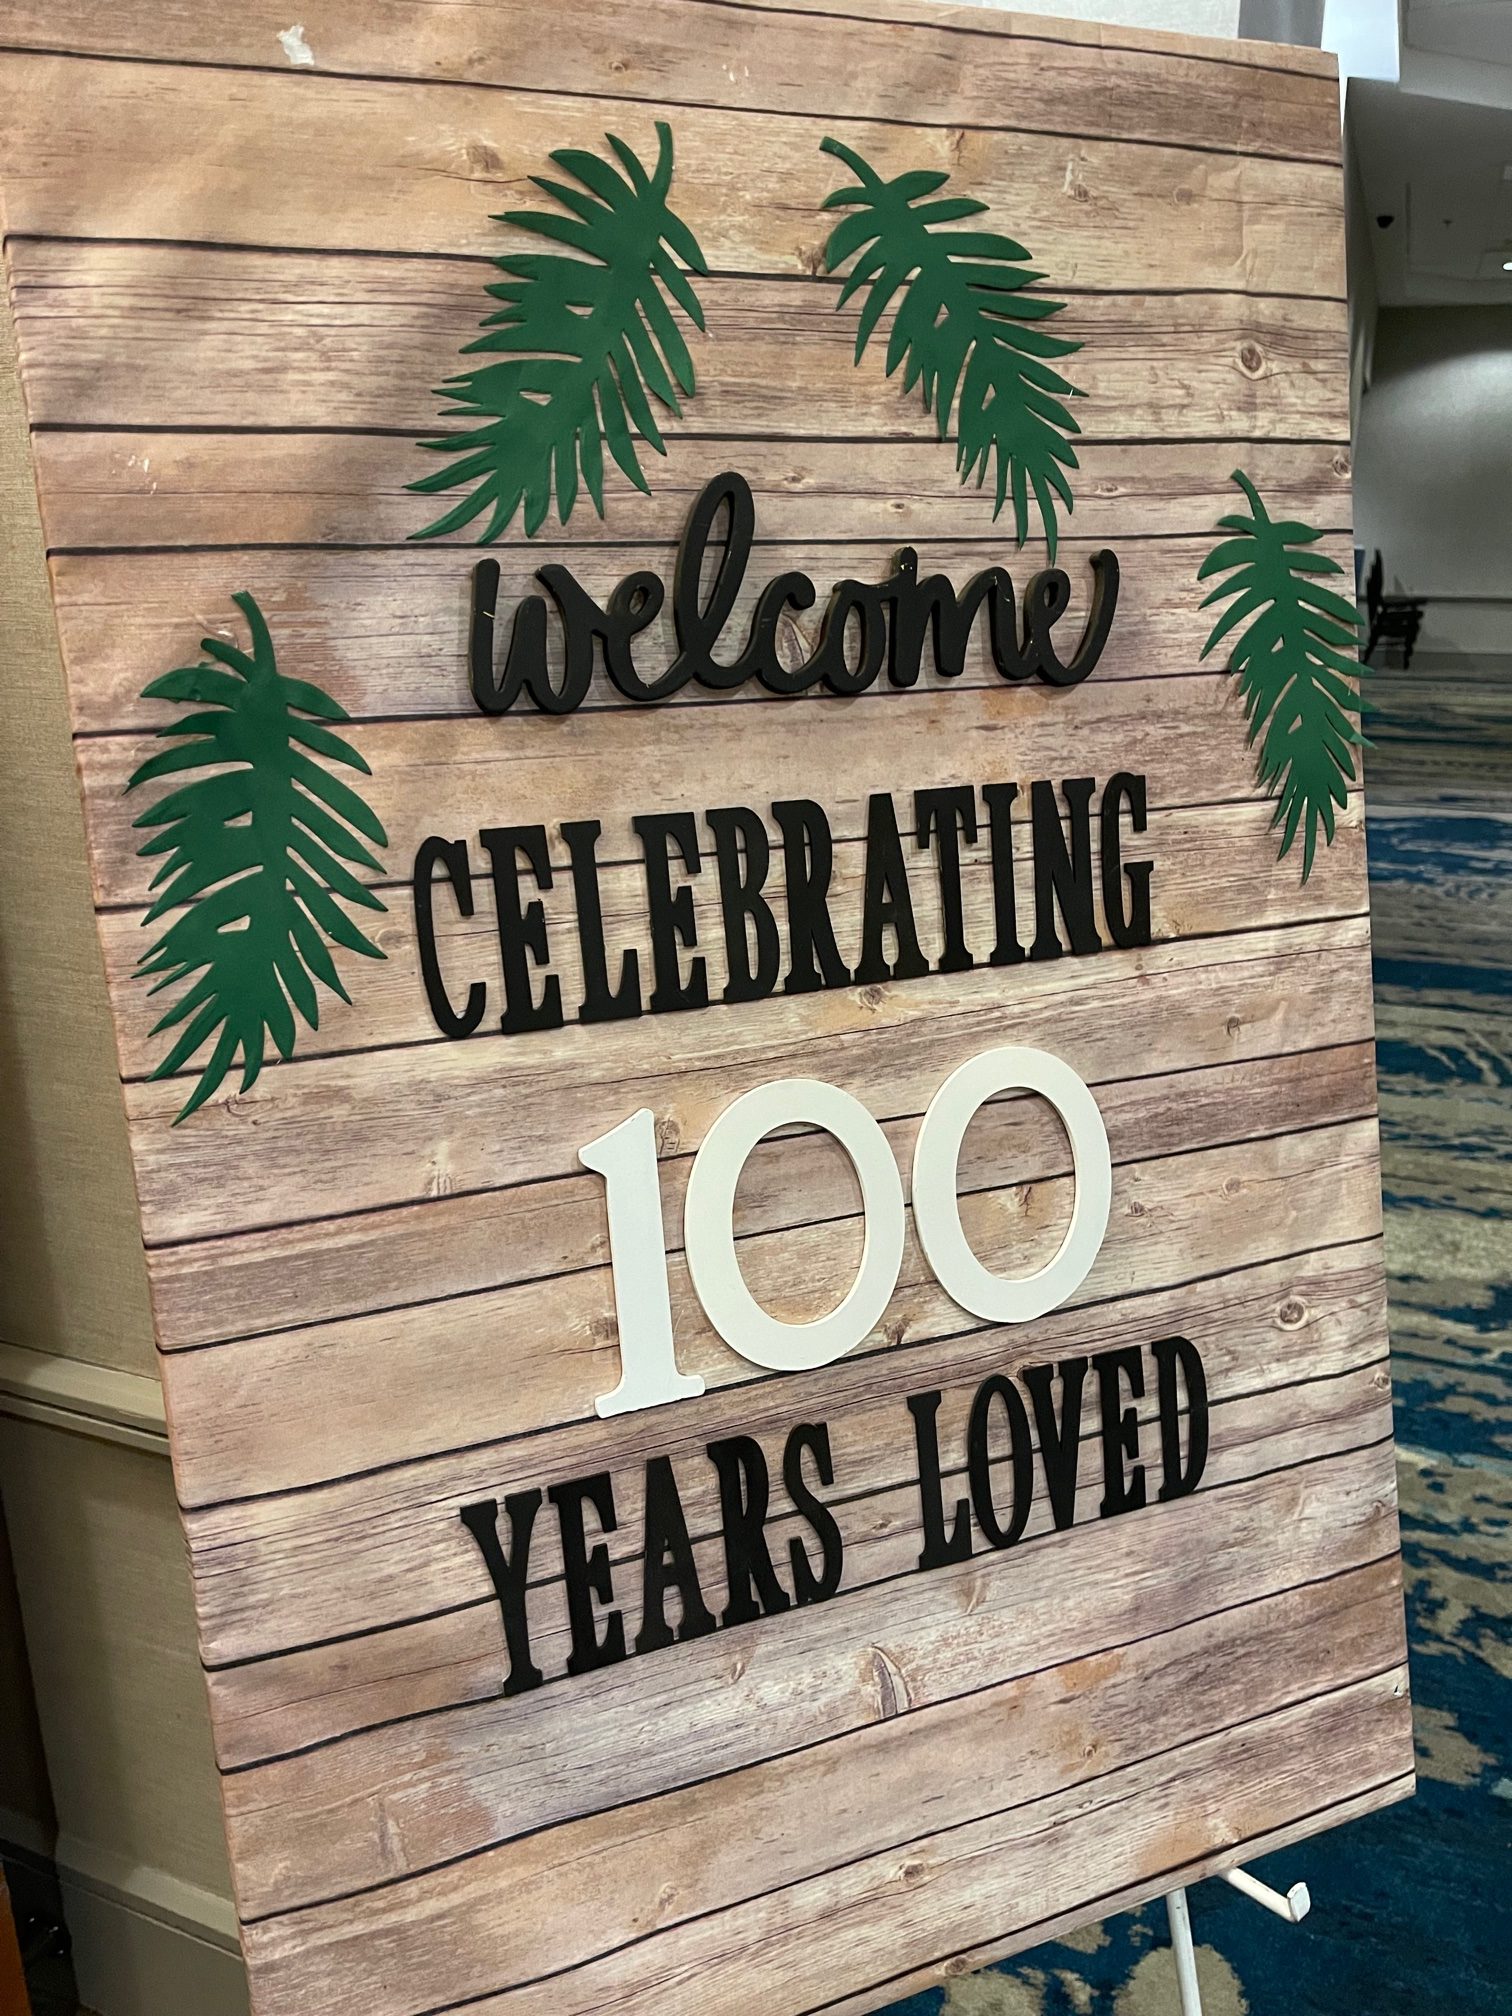 American Merchant Celebrating 100 years